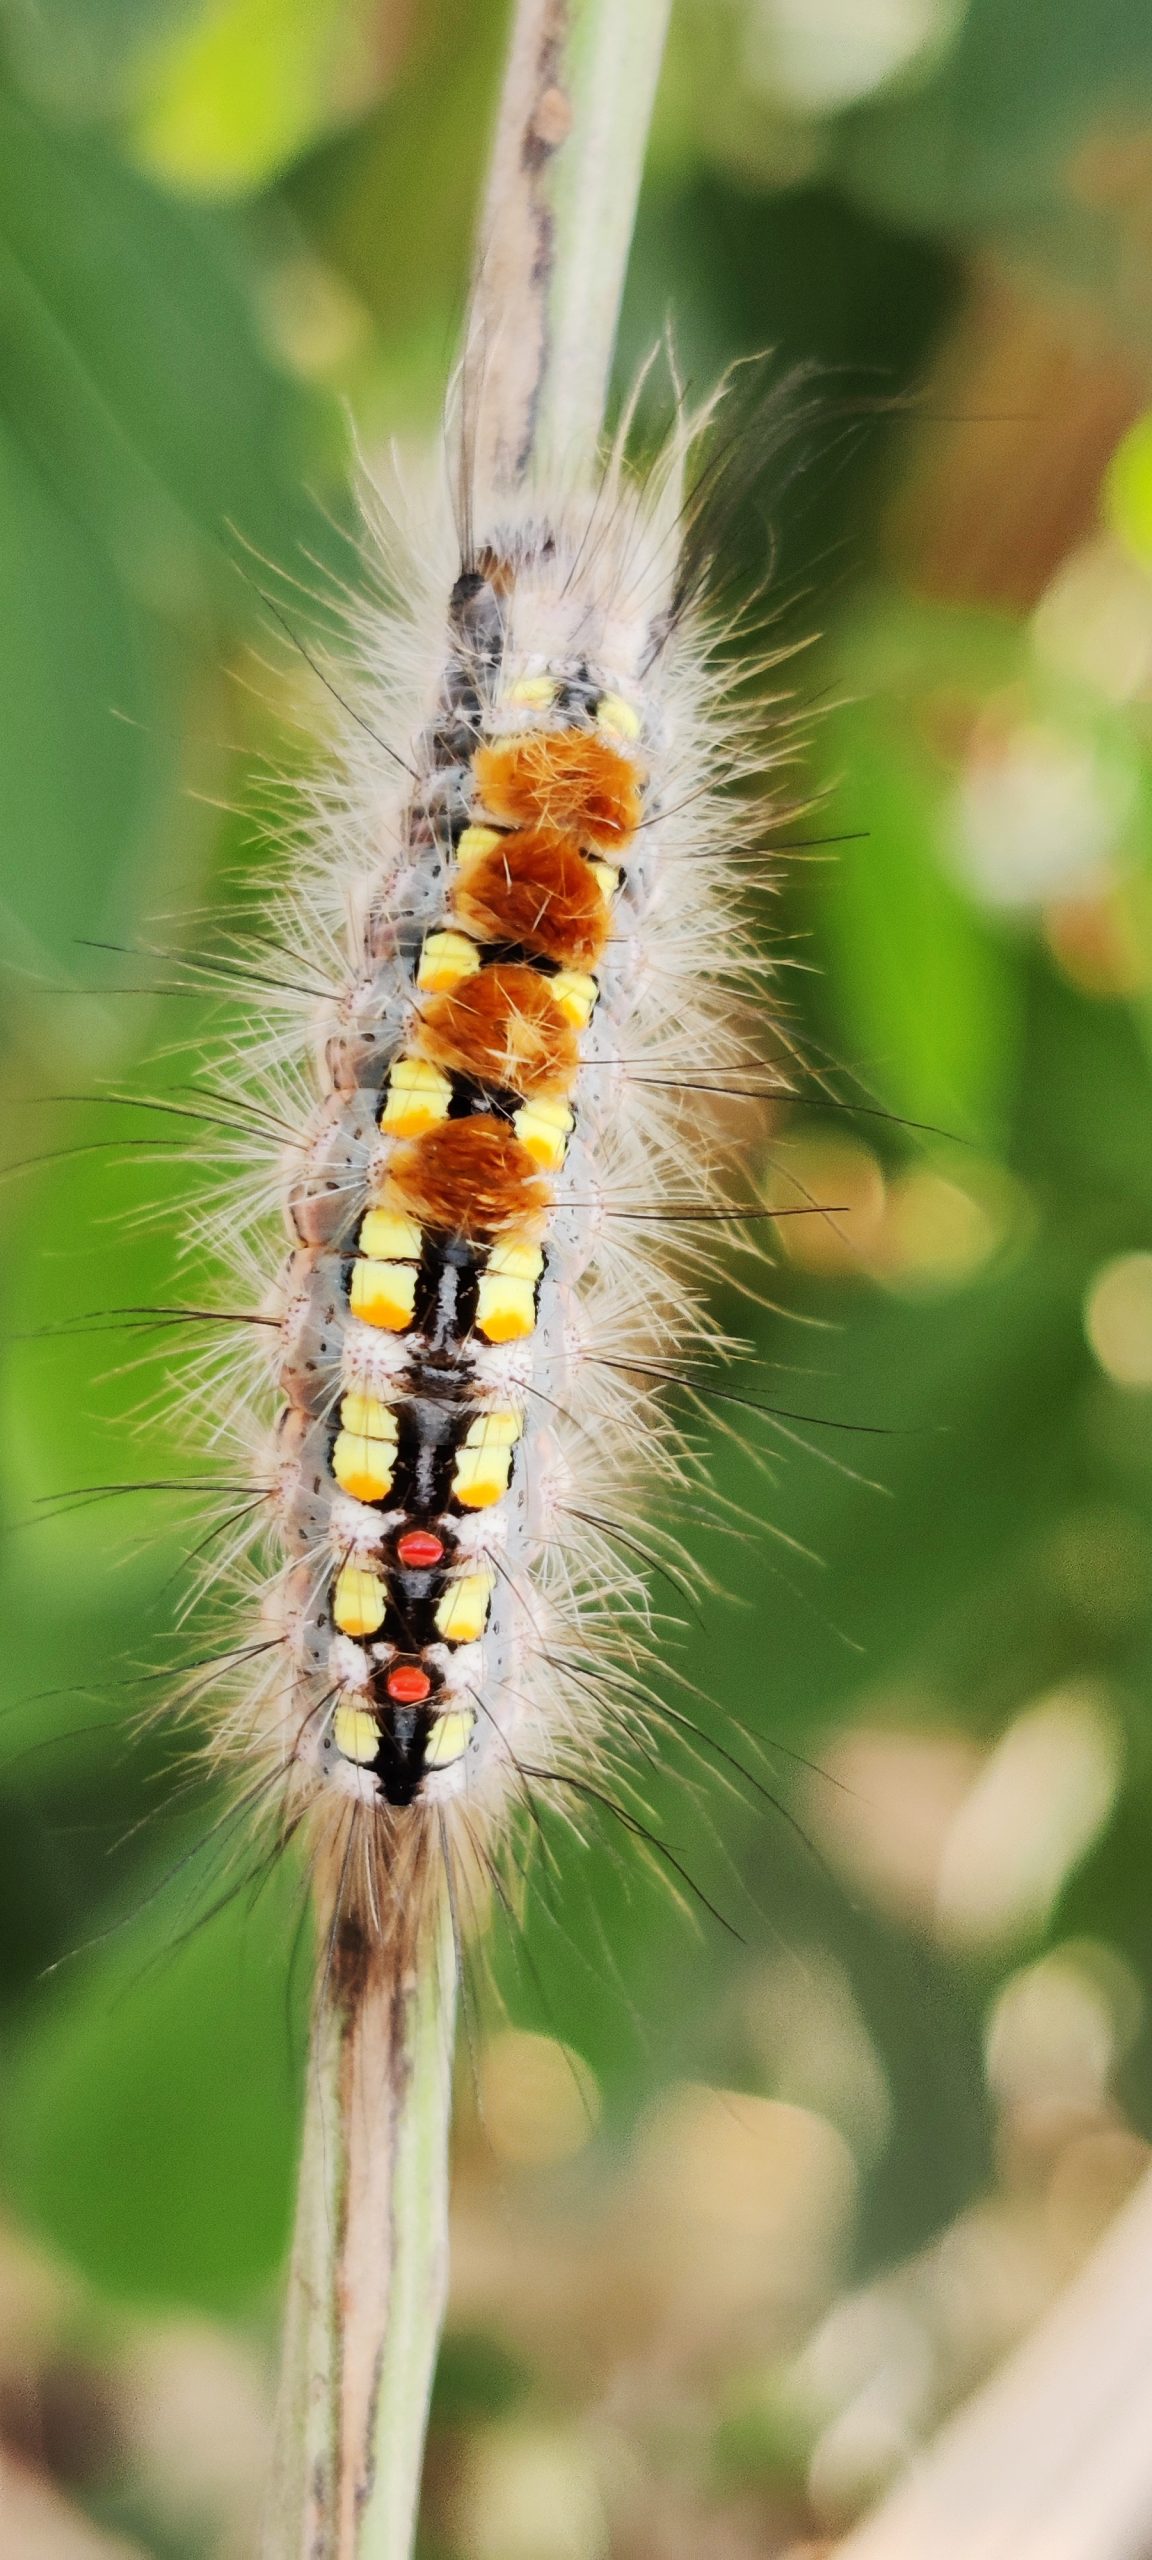 A caterpillar on a plant stem